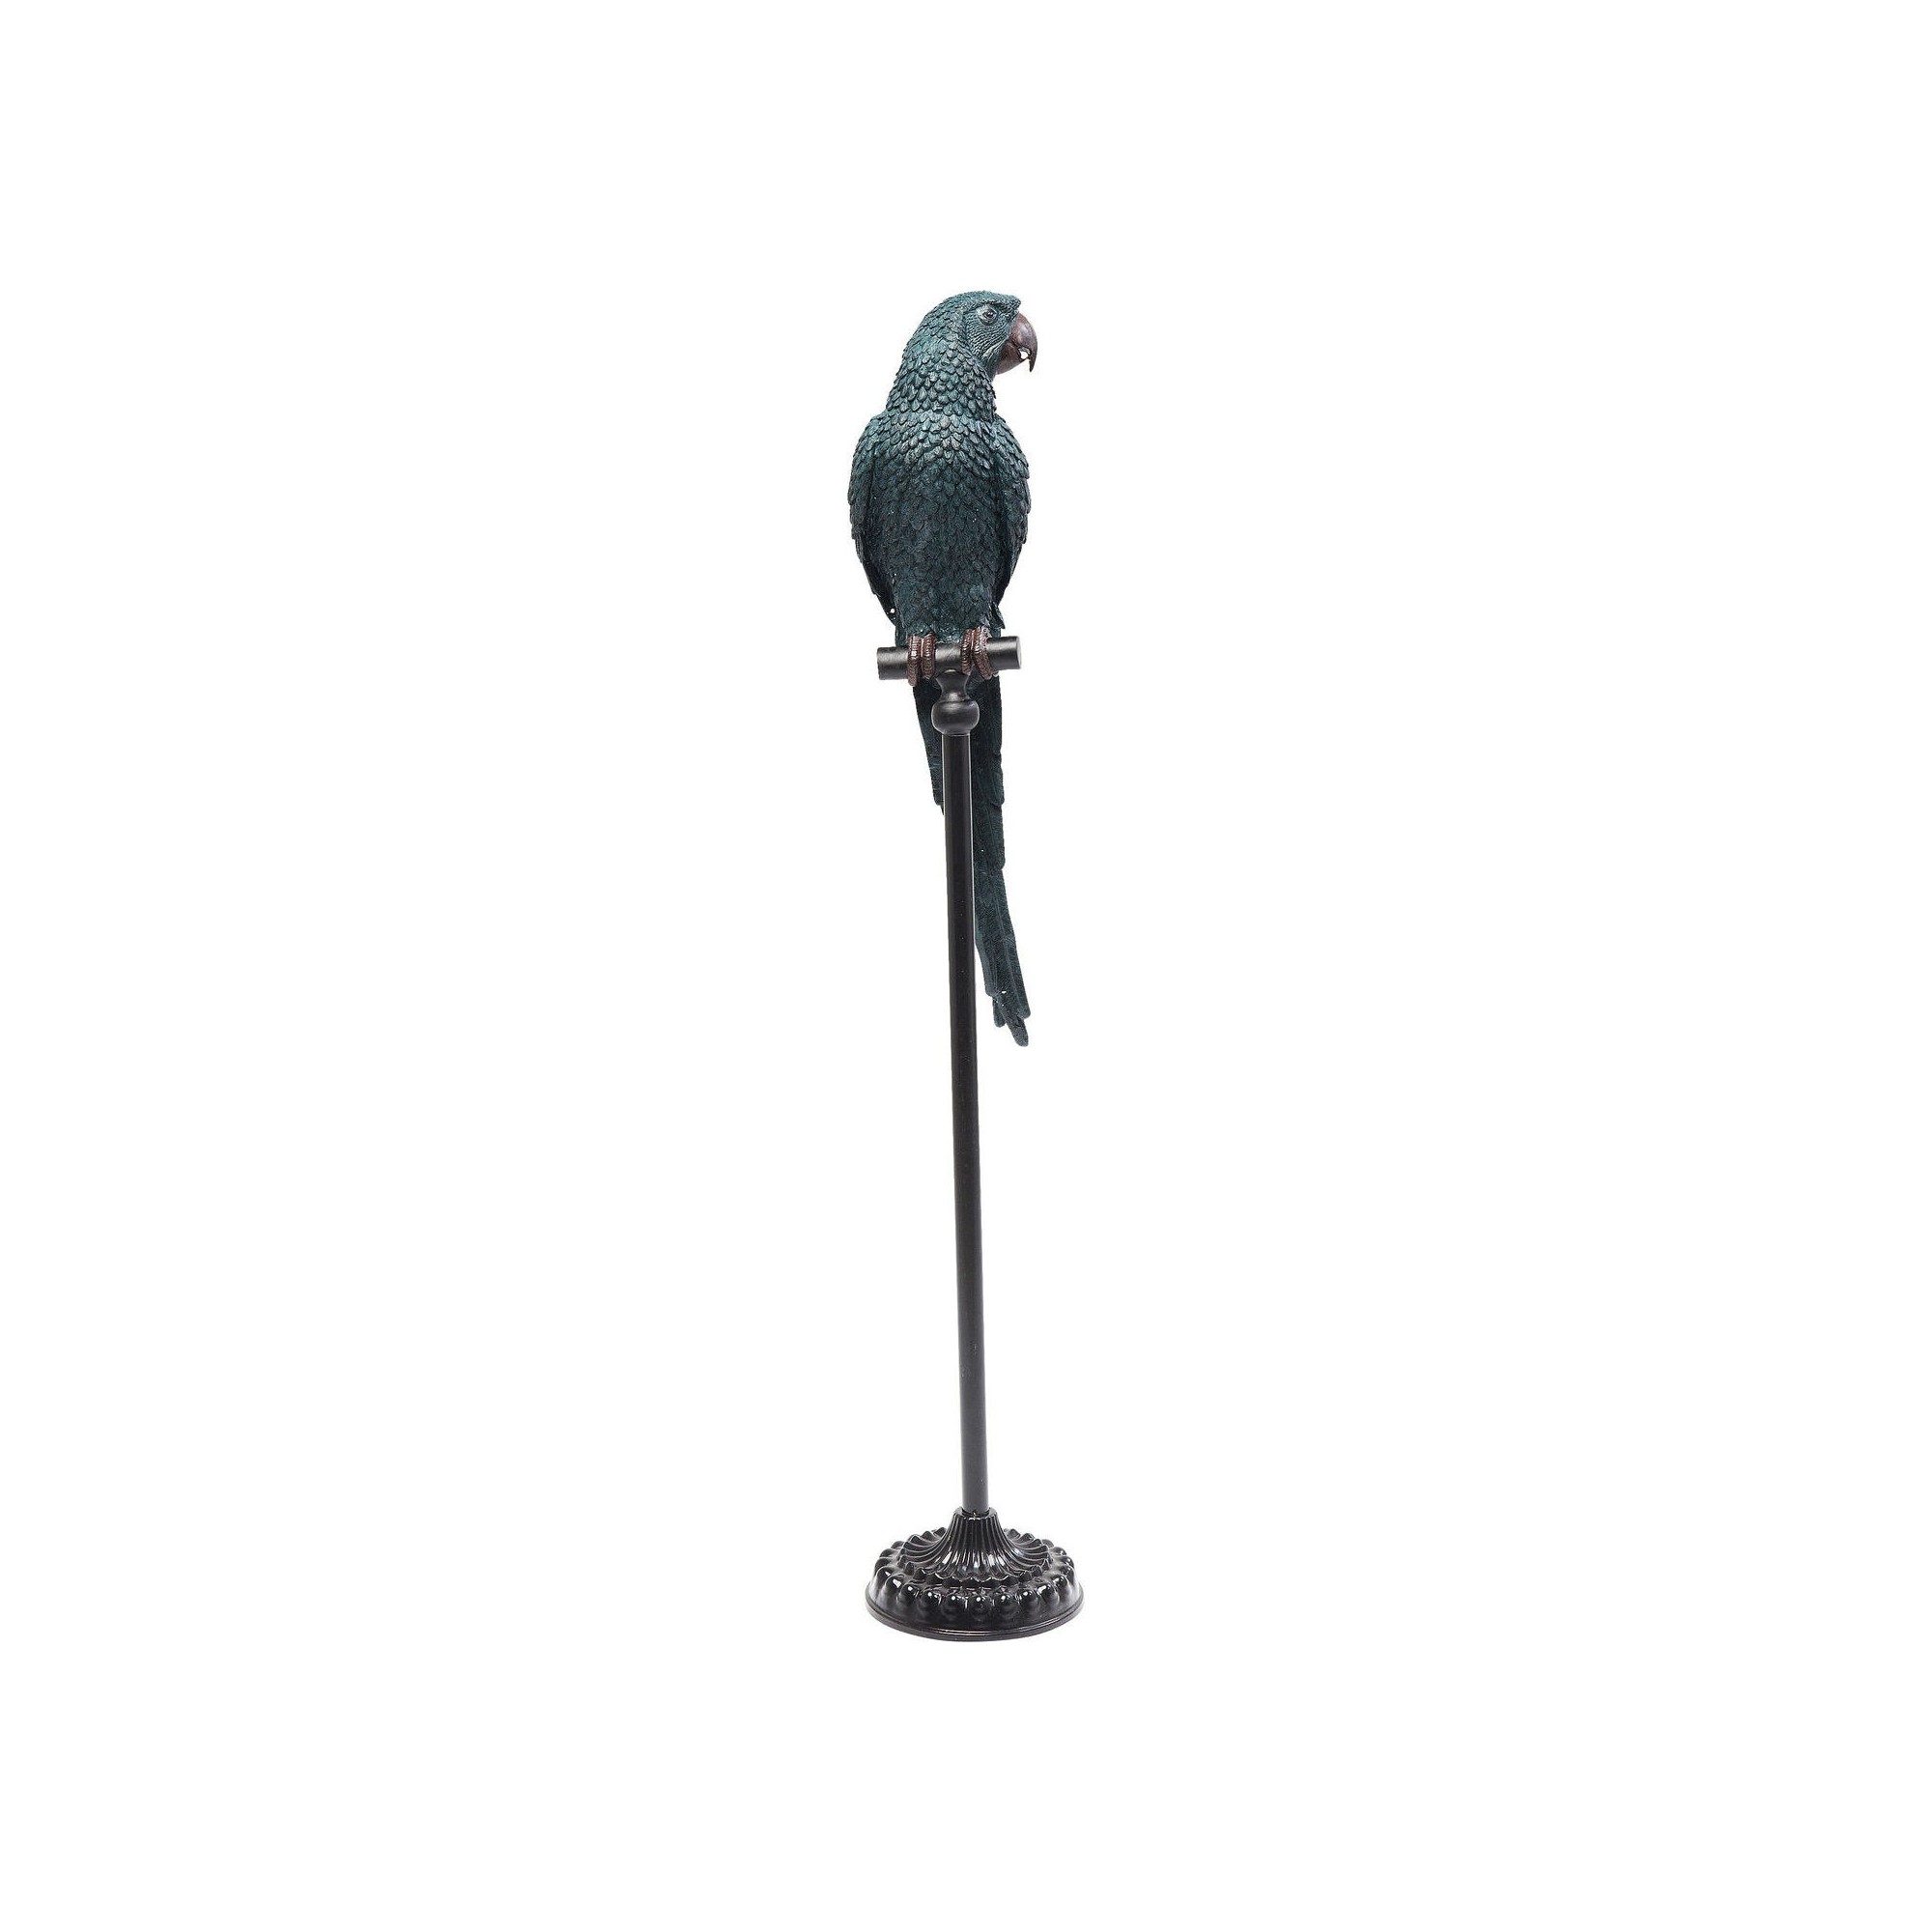 Deco Figurine Parrot Bluegreen Kare Design